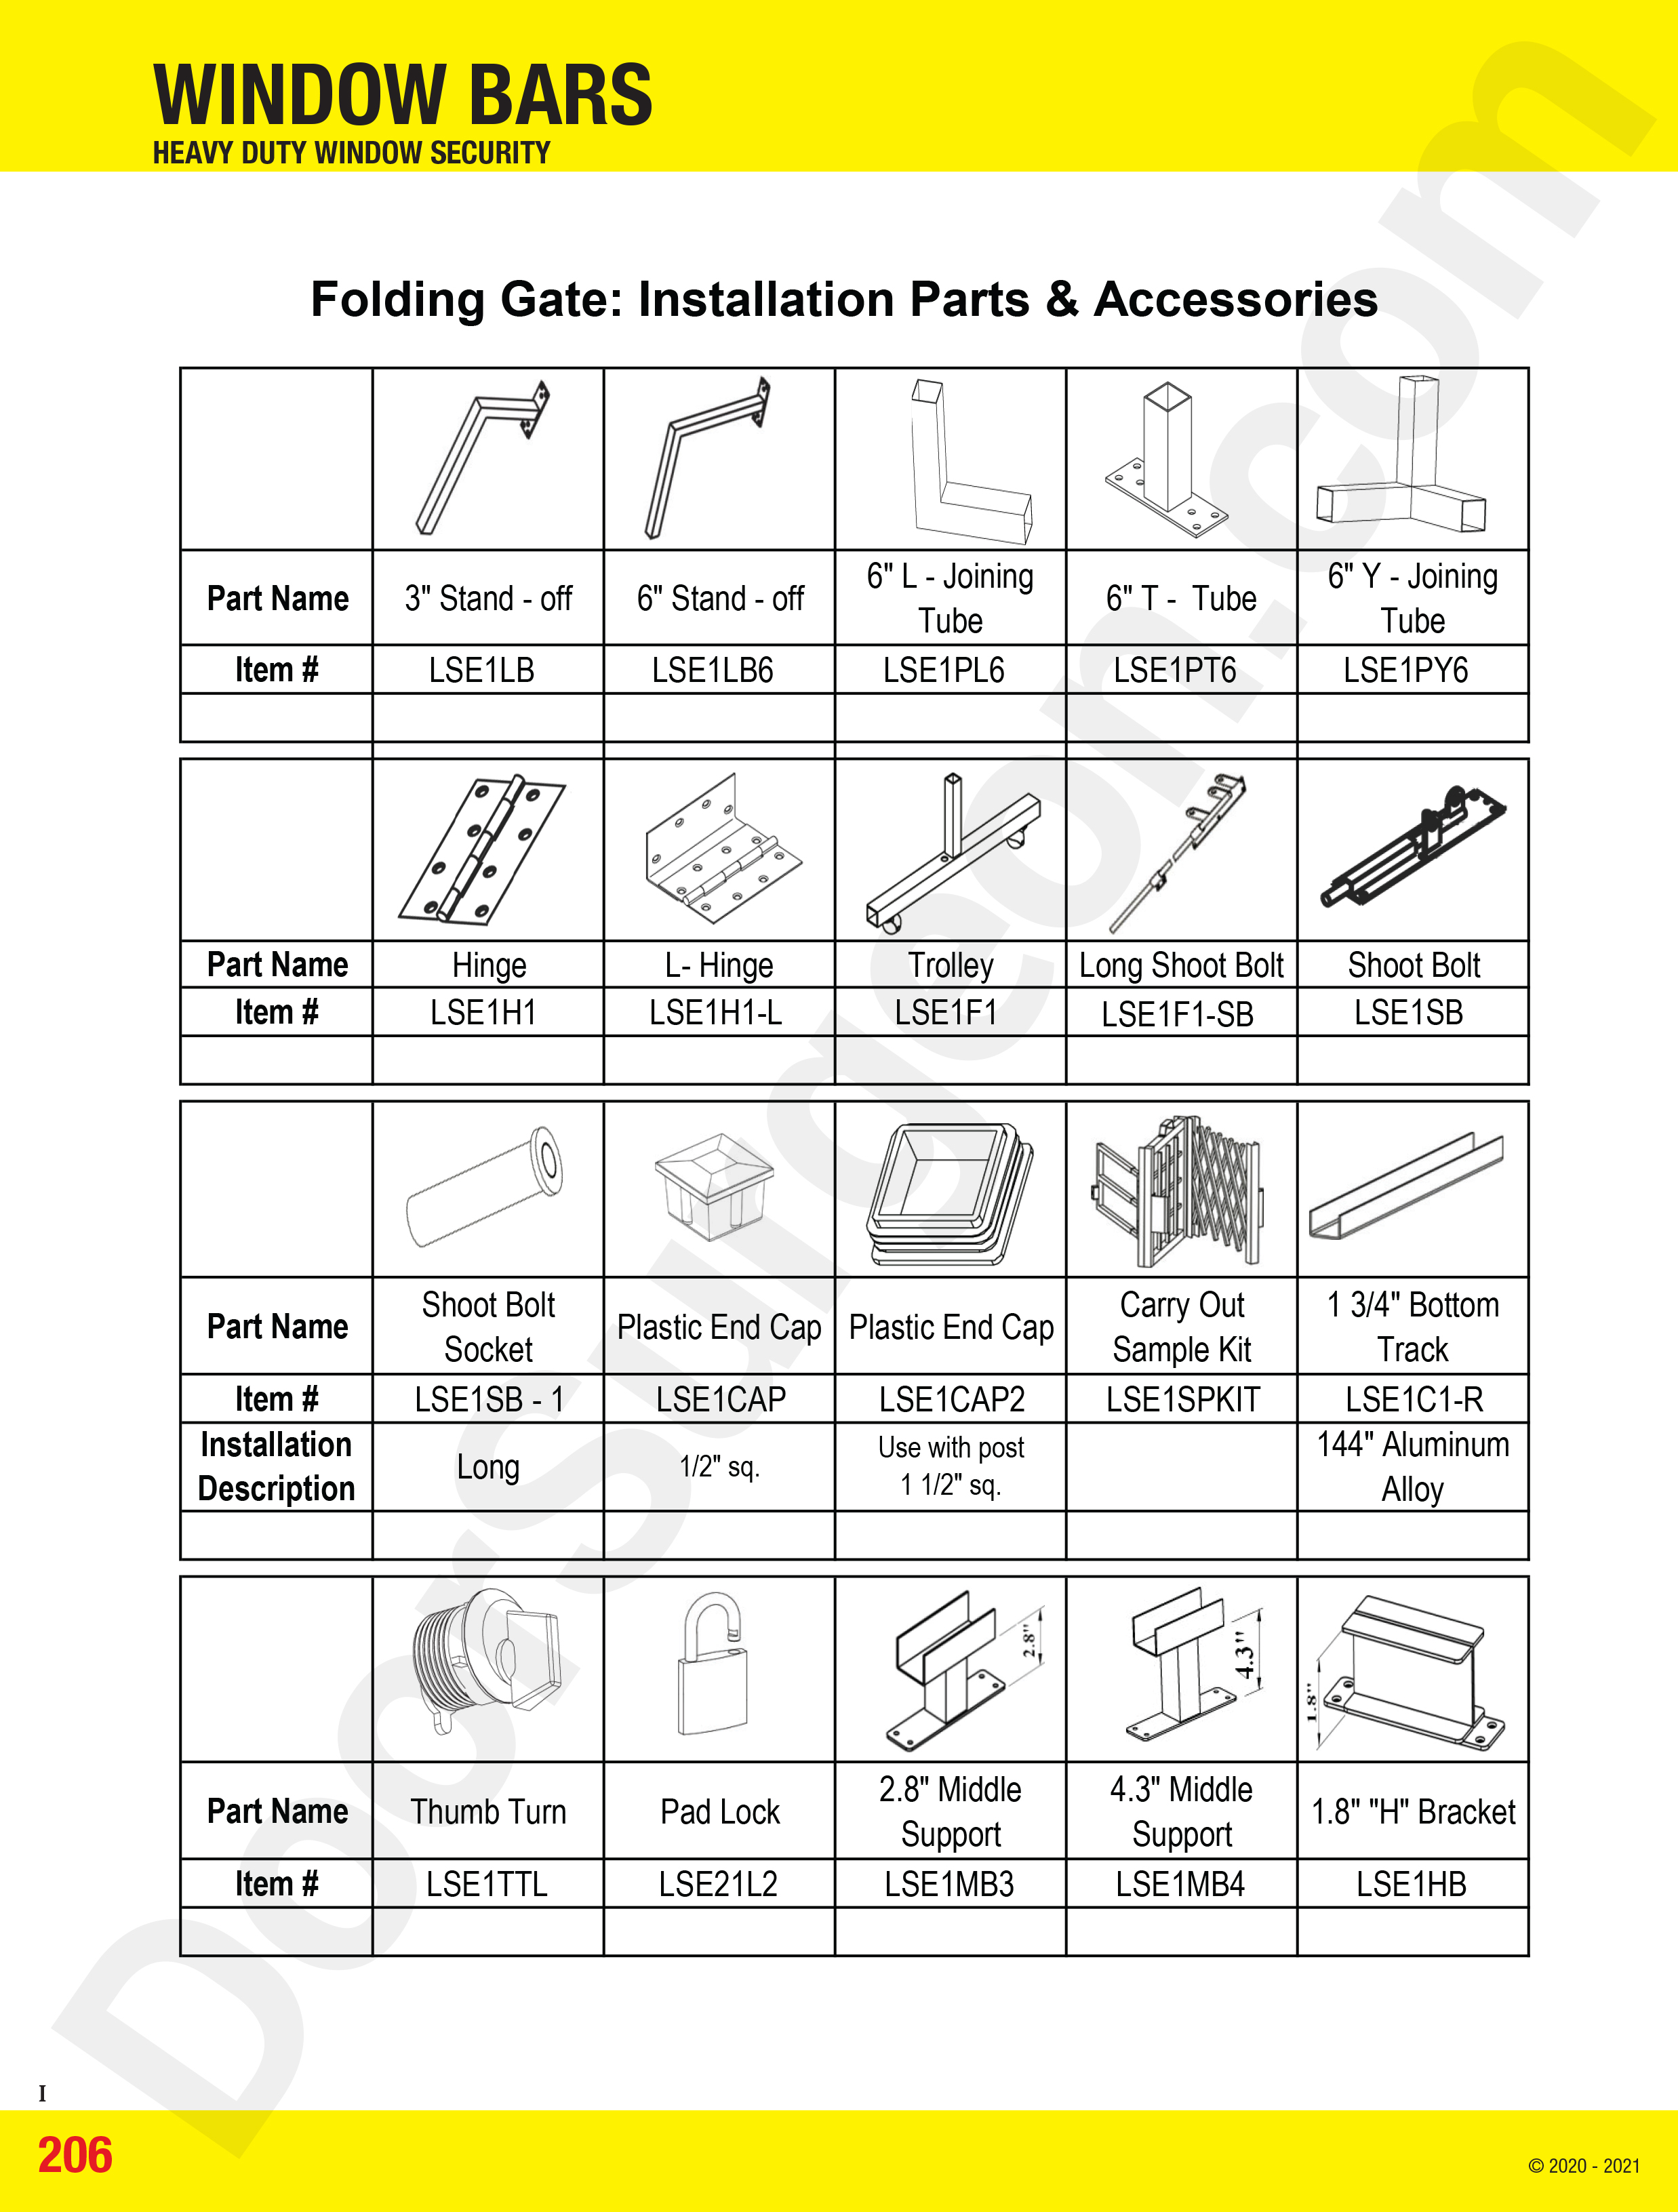 Acheson Door Surgeon folding gates installation parts and accessories.